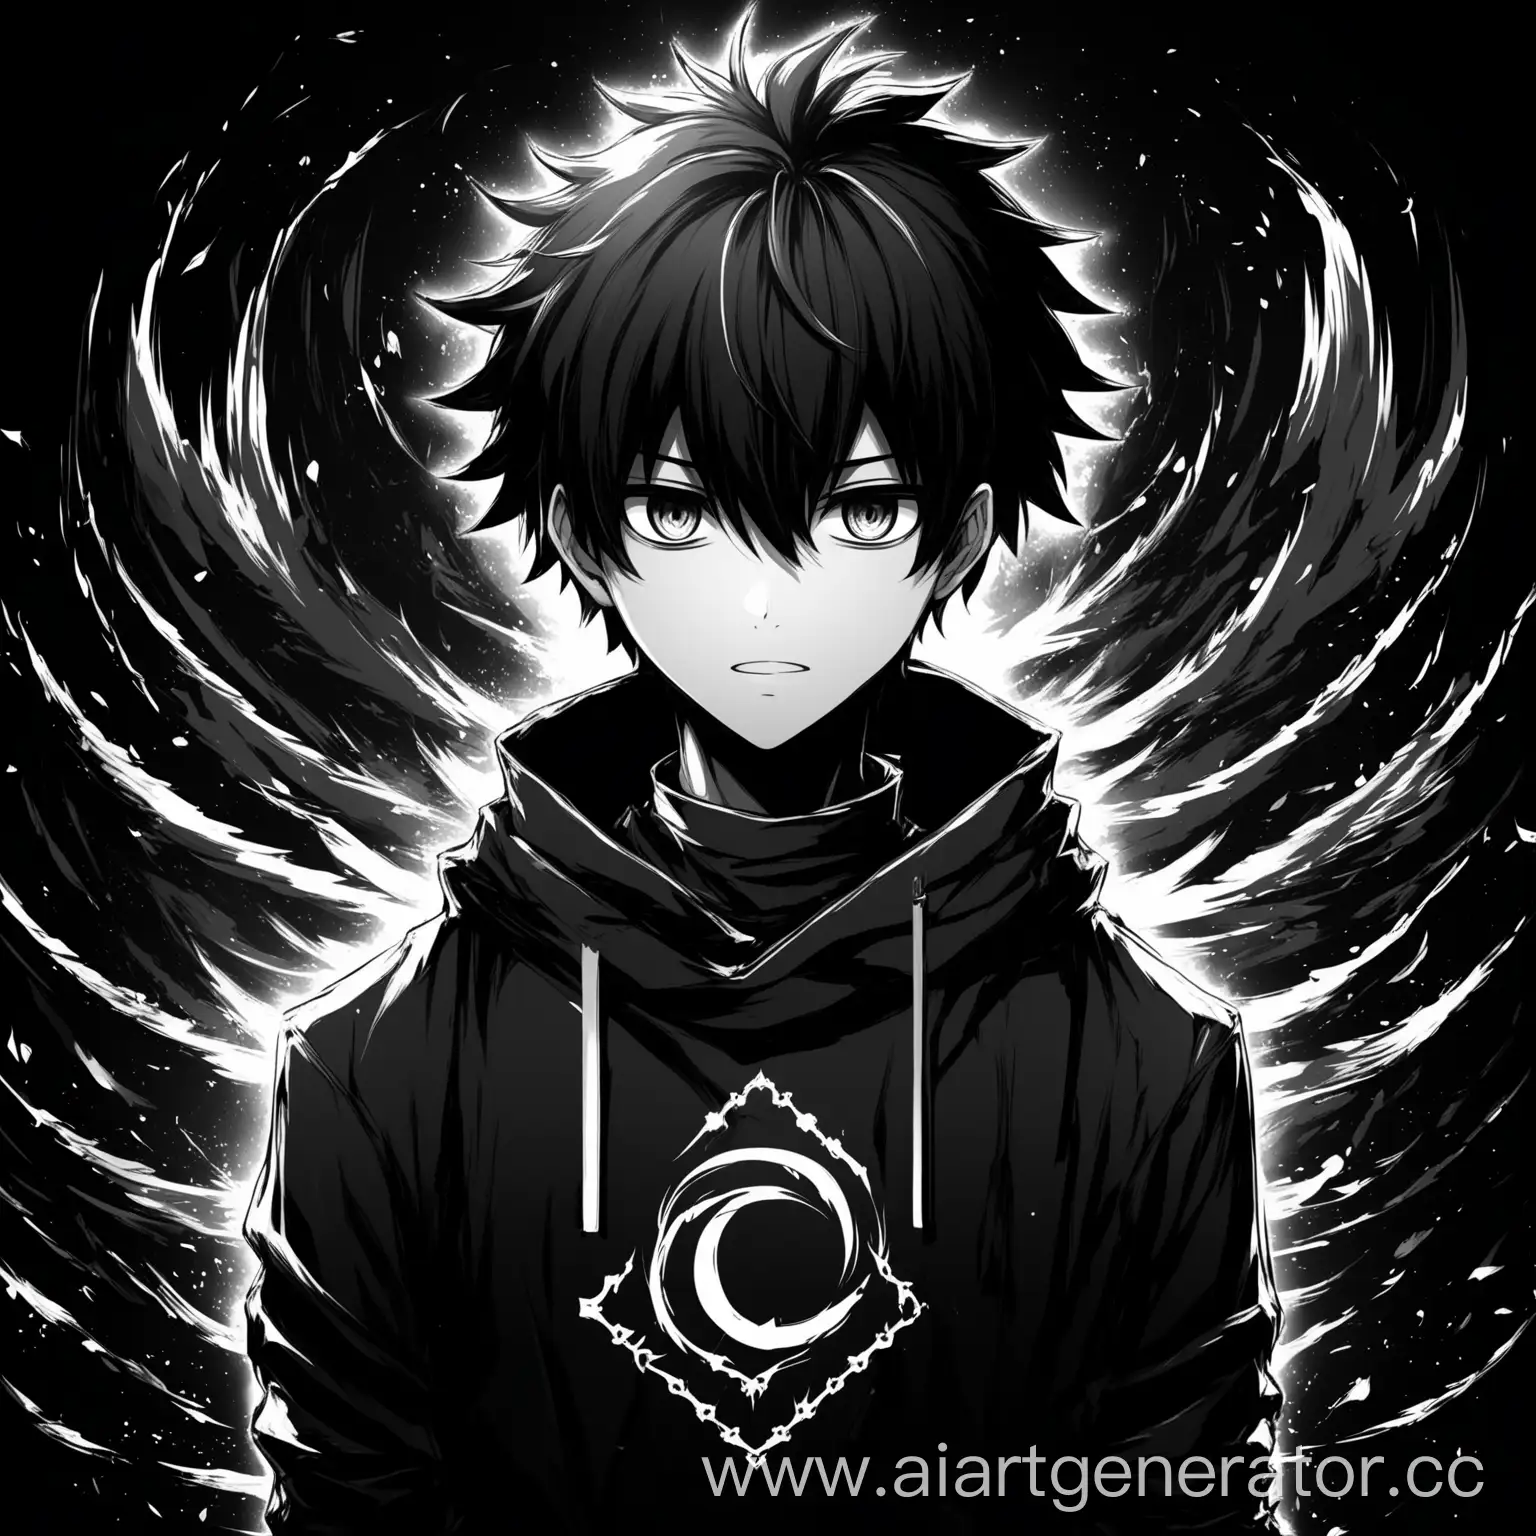 Amazing anime boy dark black and white art for my logo